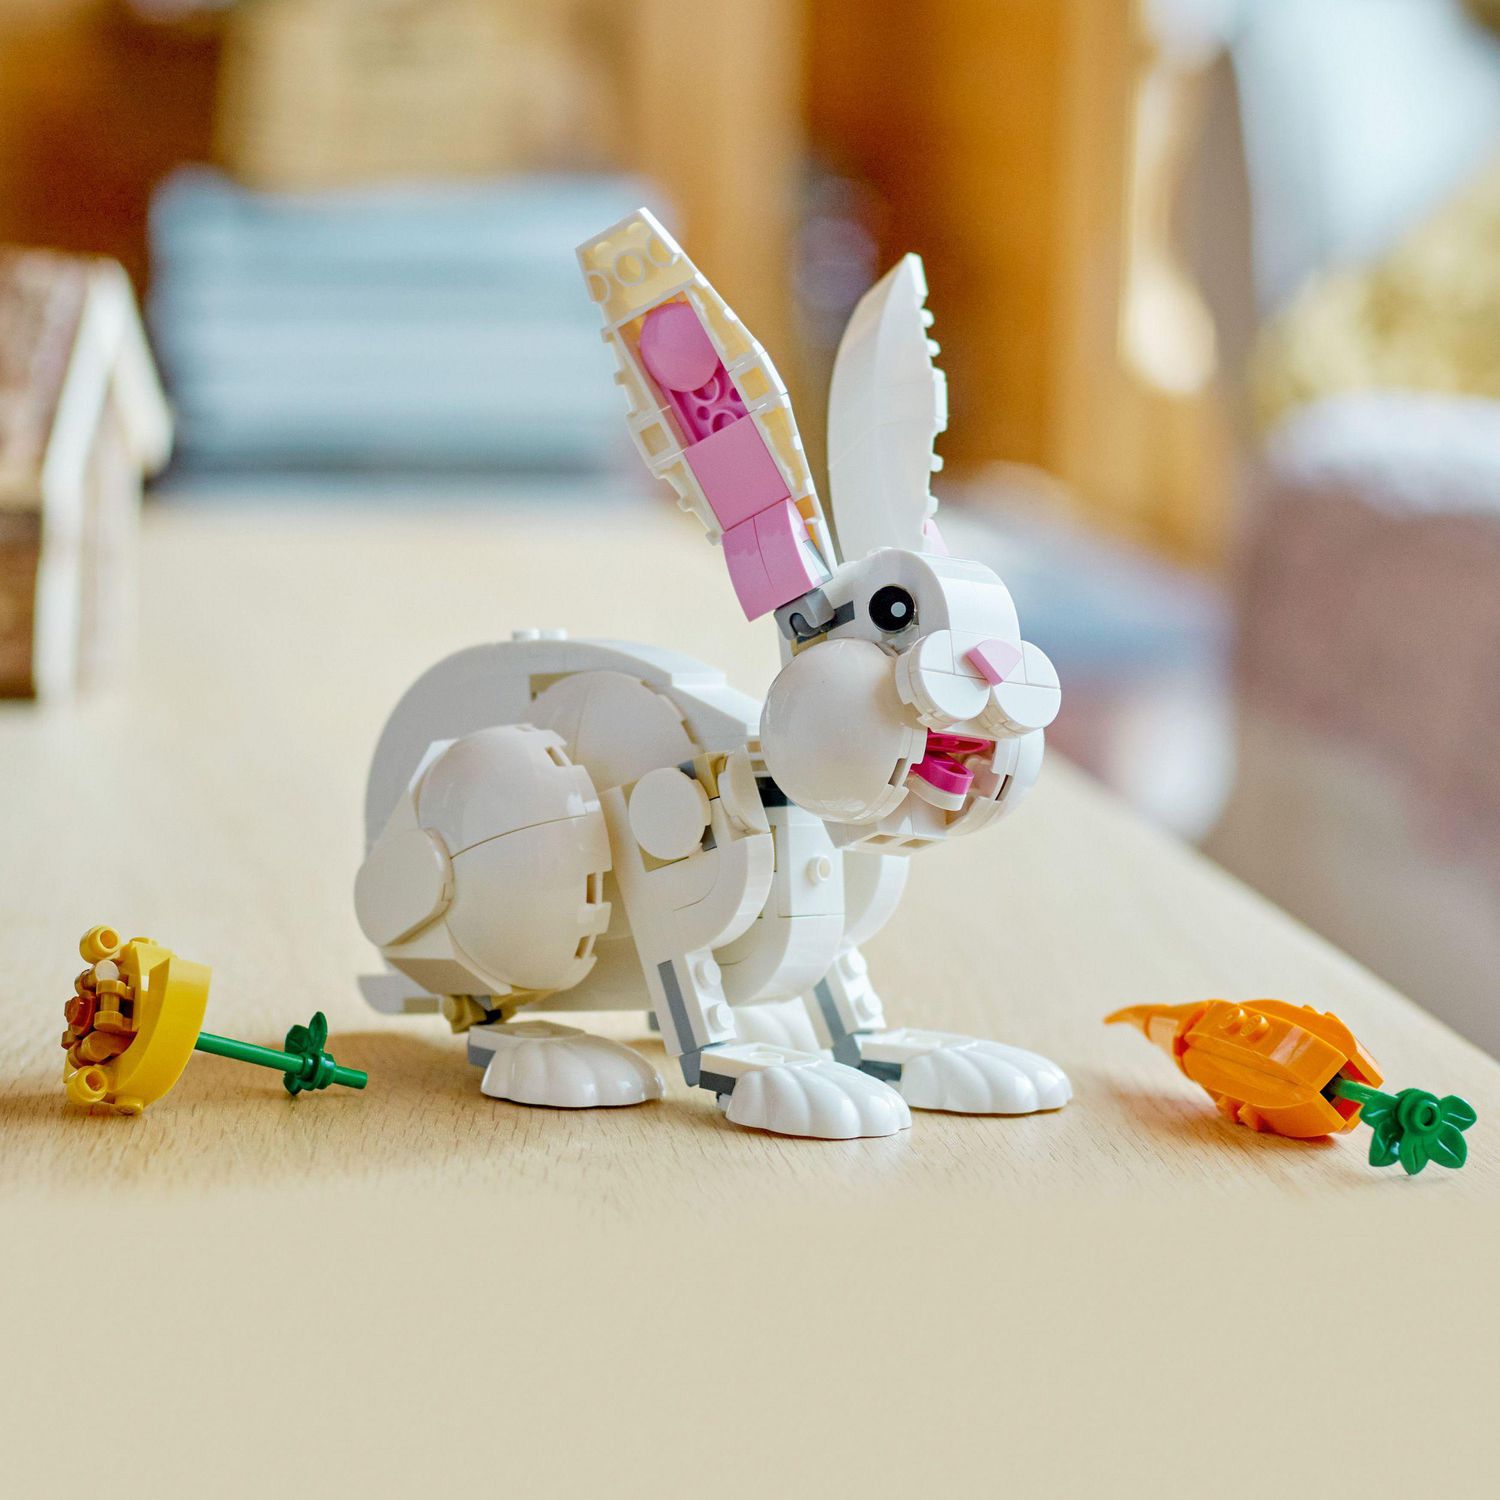 LEGO Creator 3 in 1 White Rabbit Animal Toy Building Set, STEM Toy 